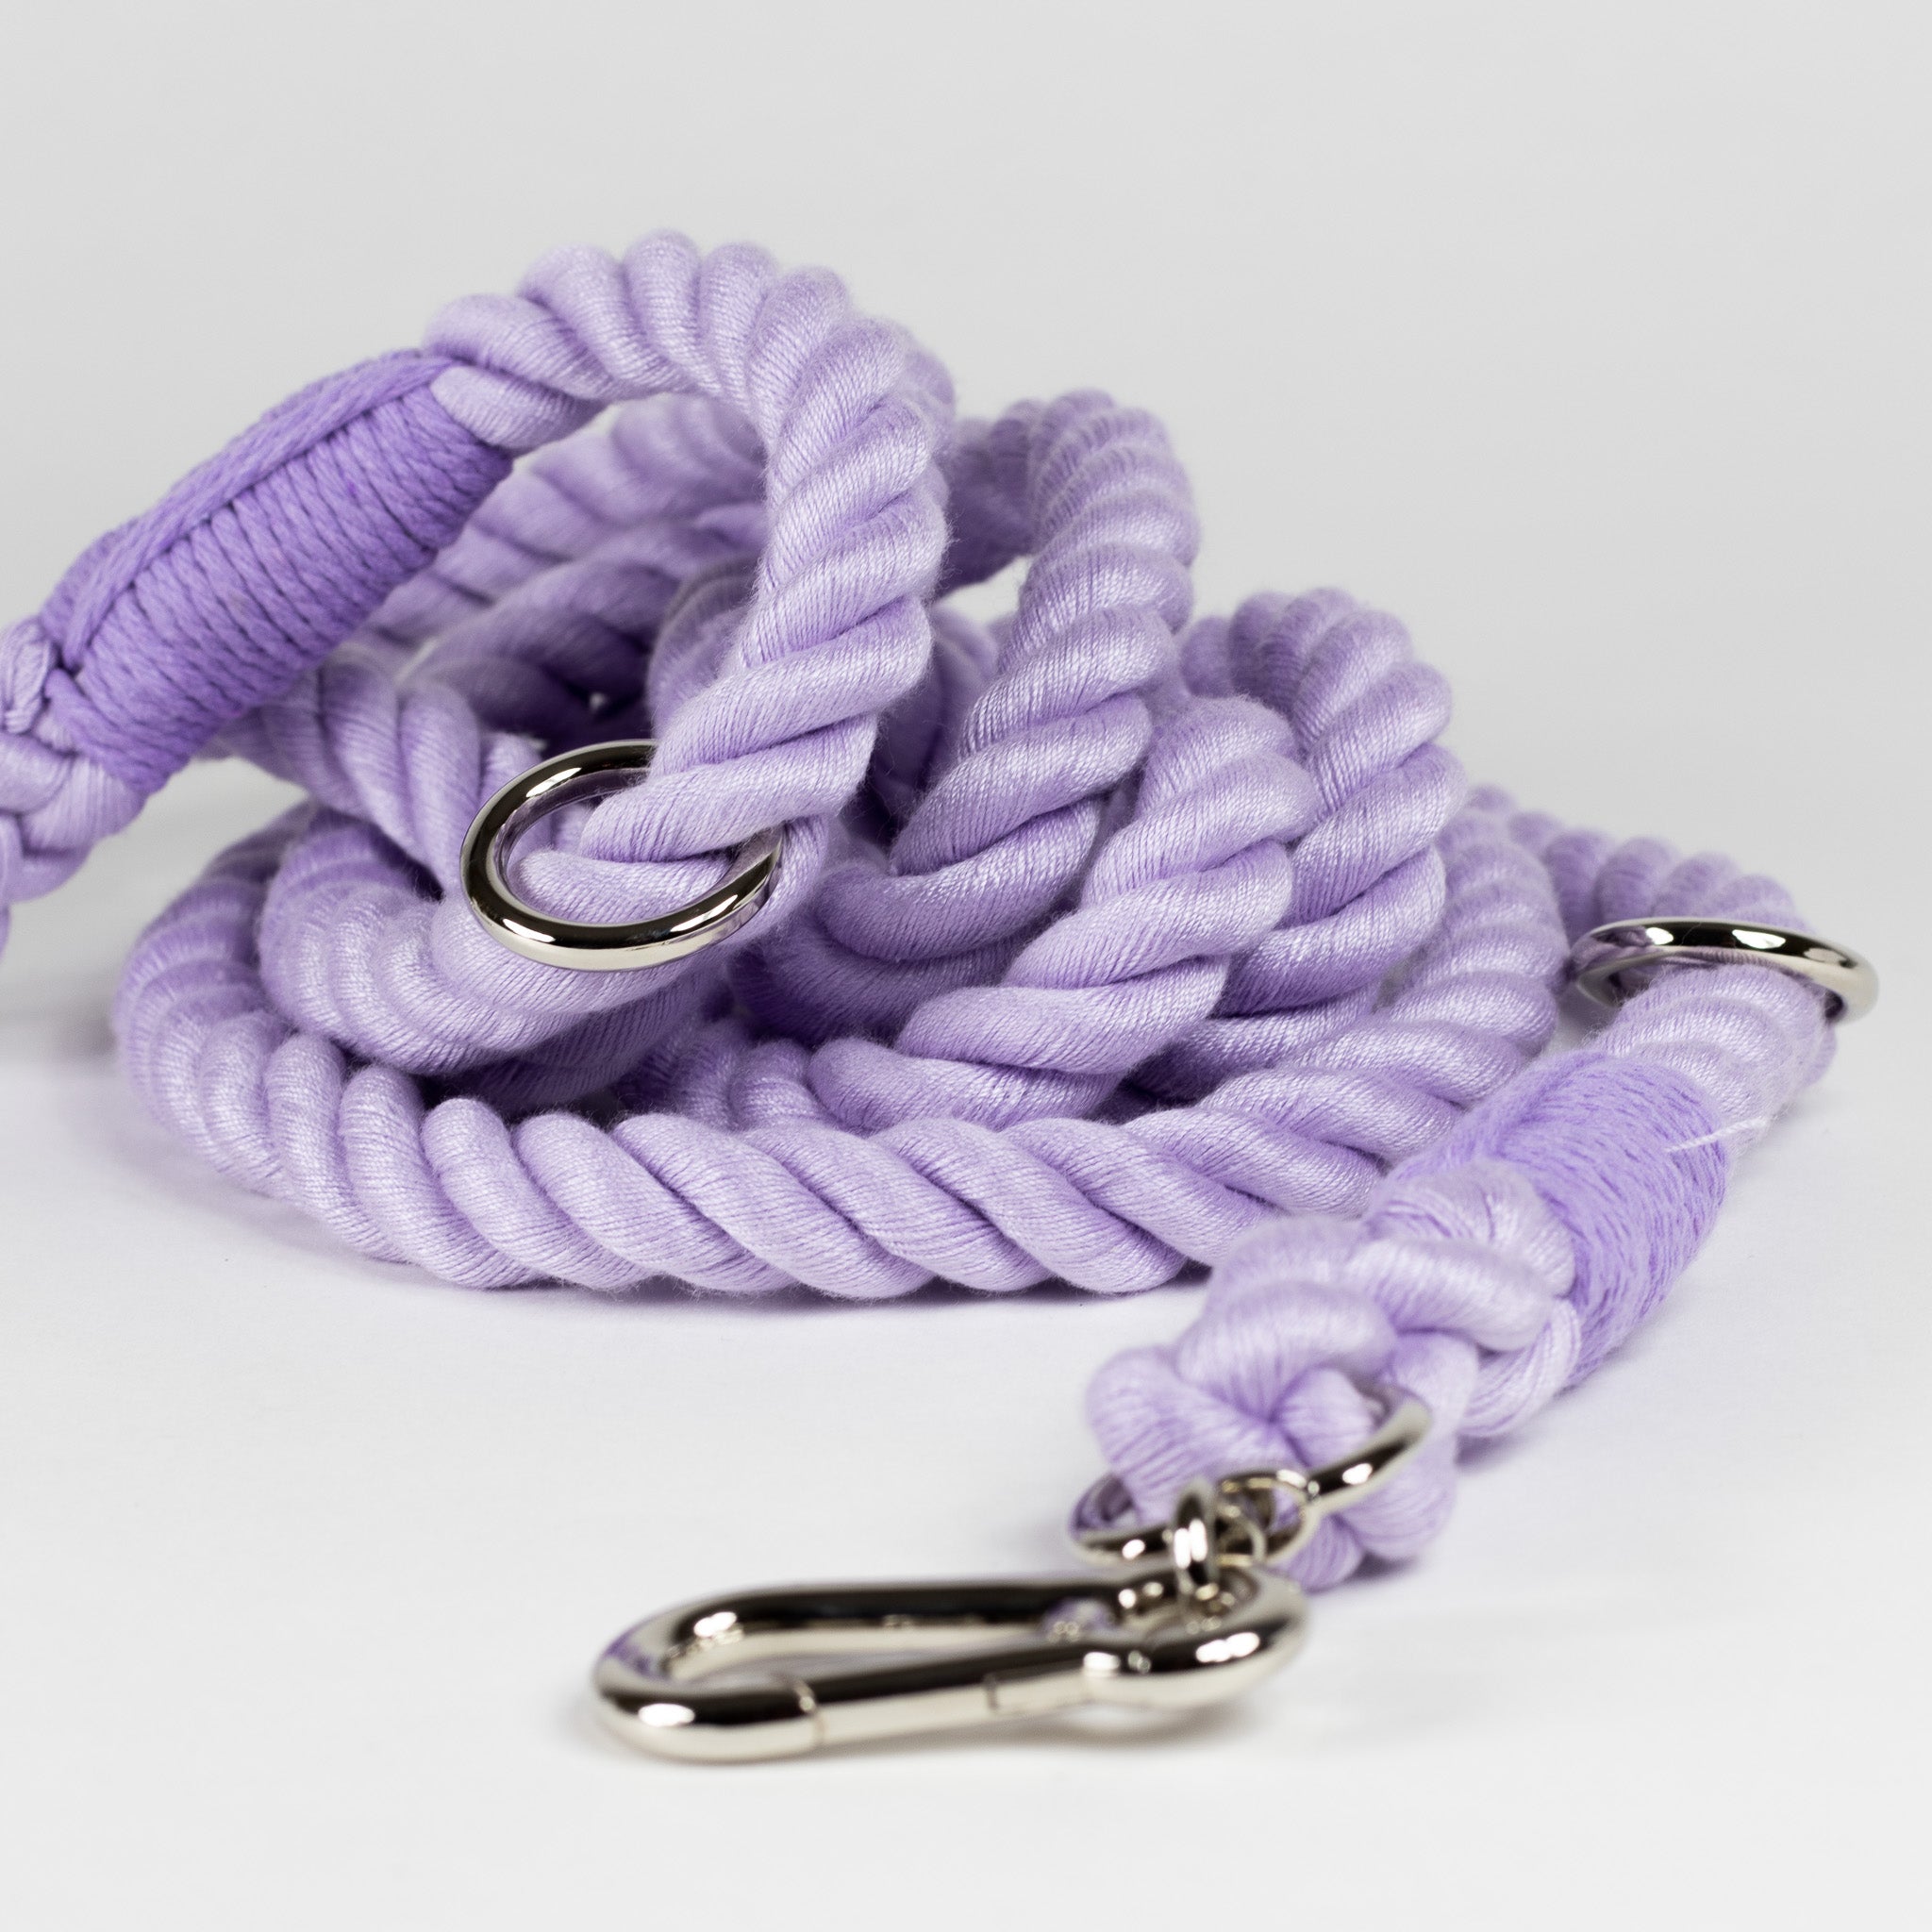 Dog Rope Collar & Leash Set PetsRus